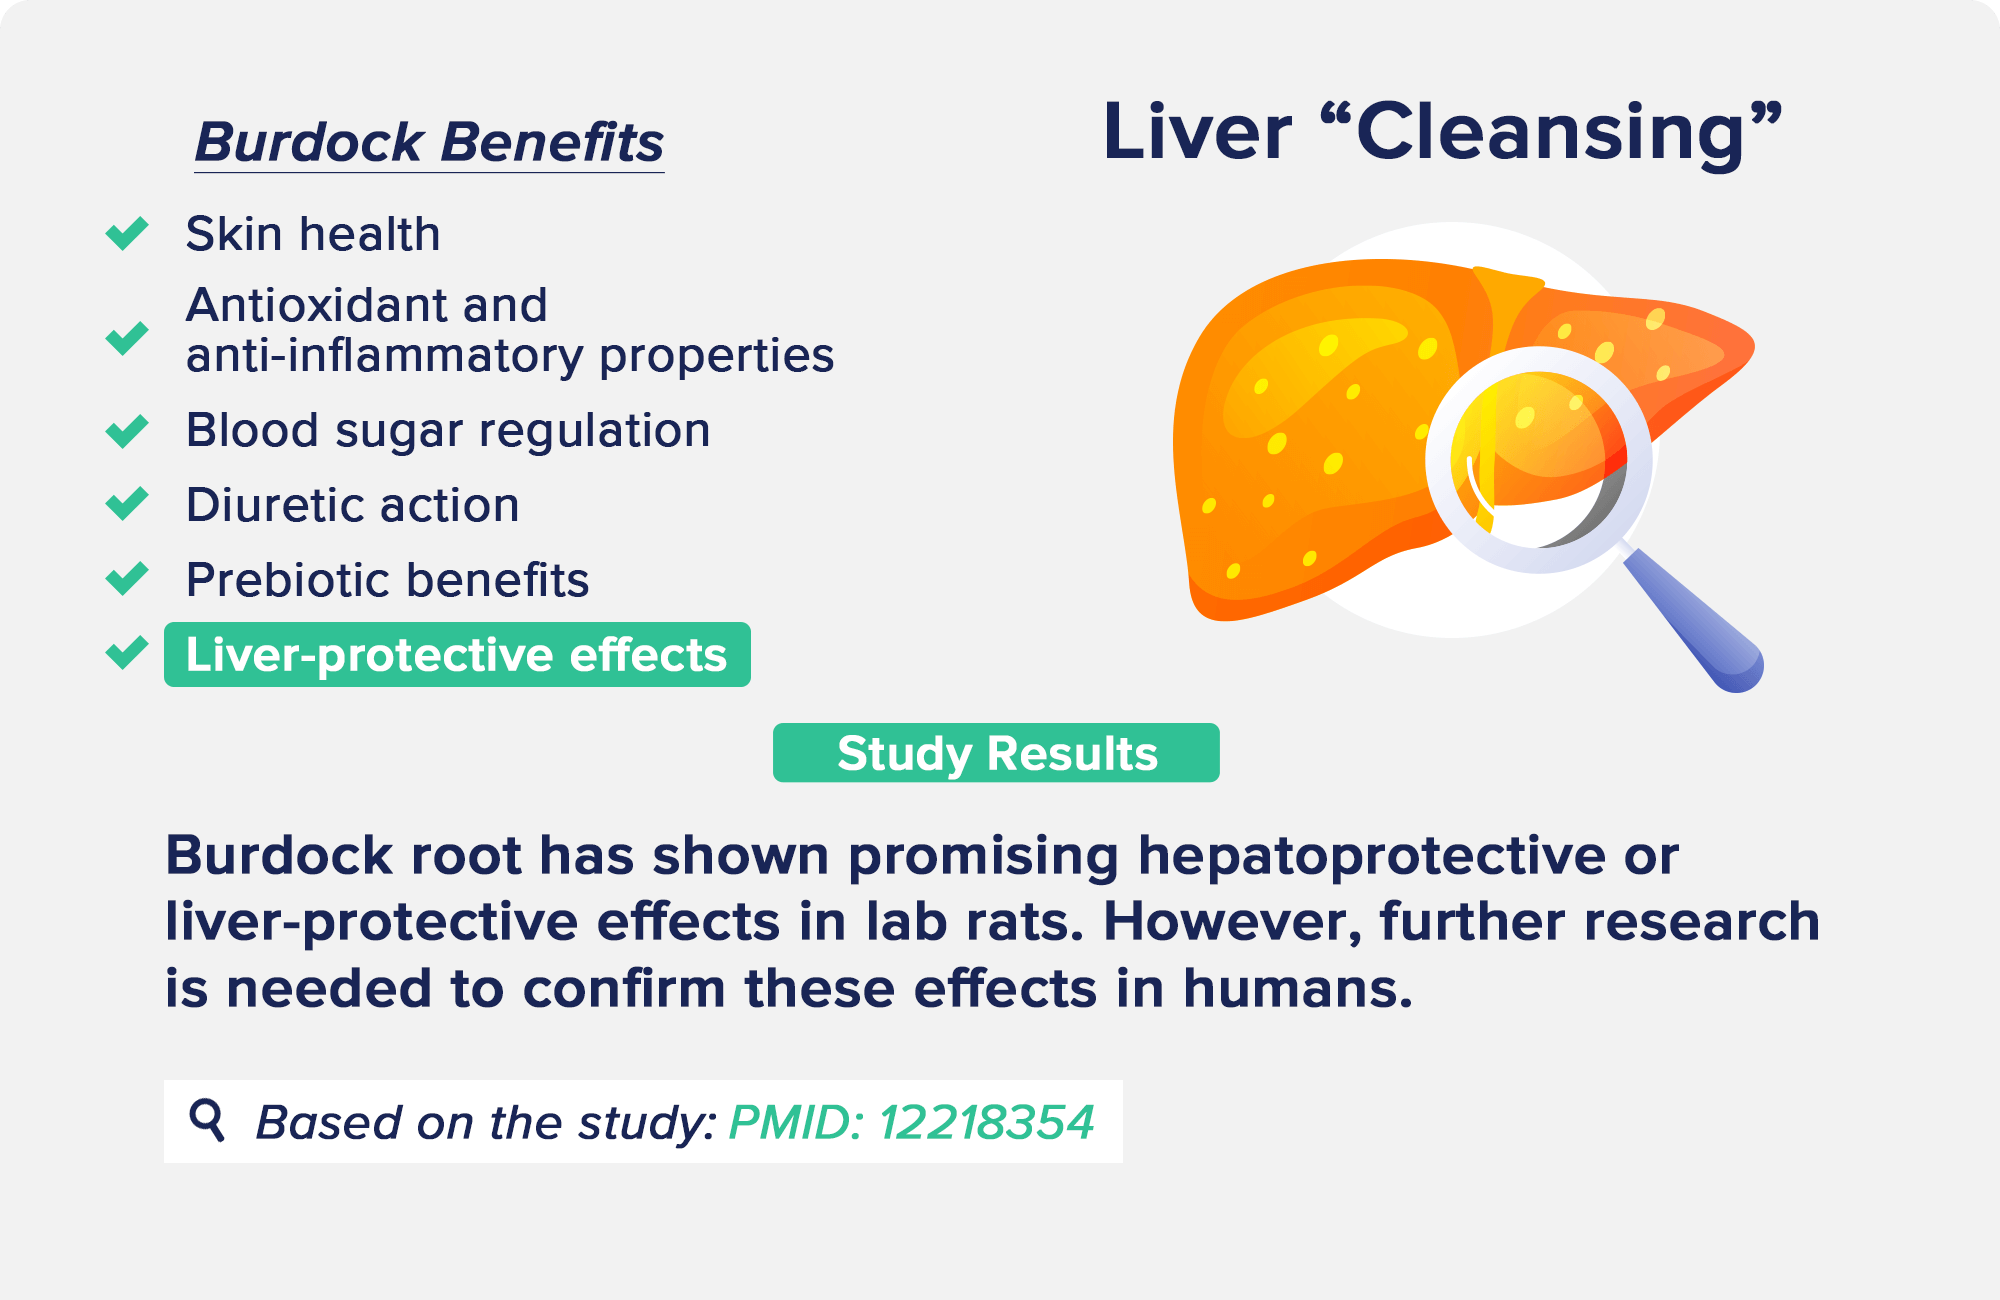 burdock benefits: Liver “Cleansing”